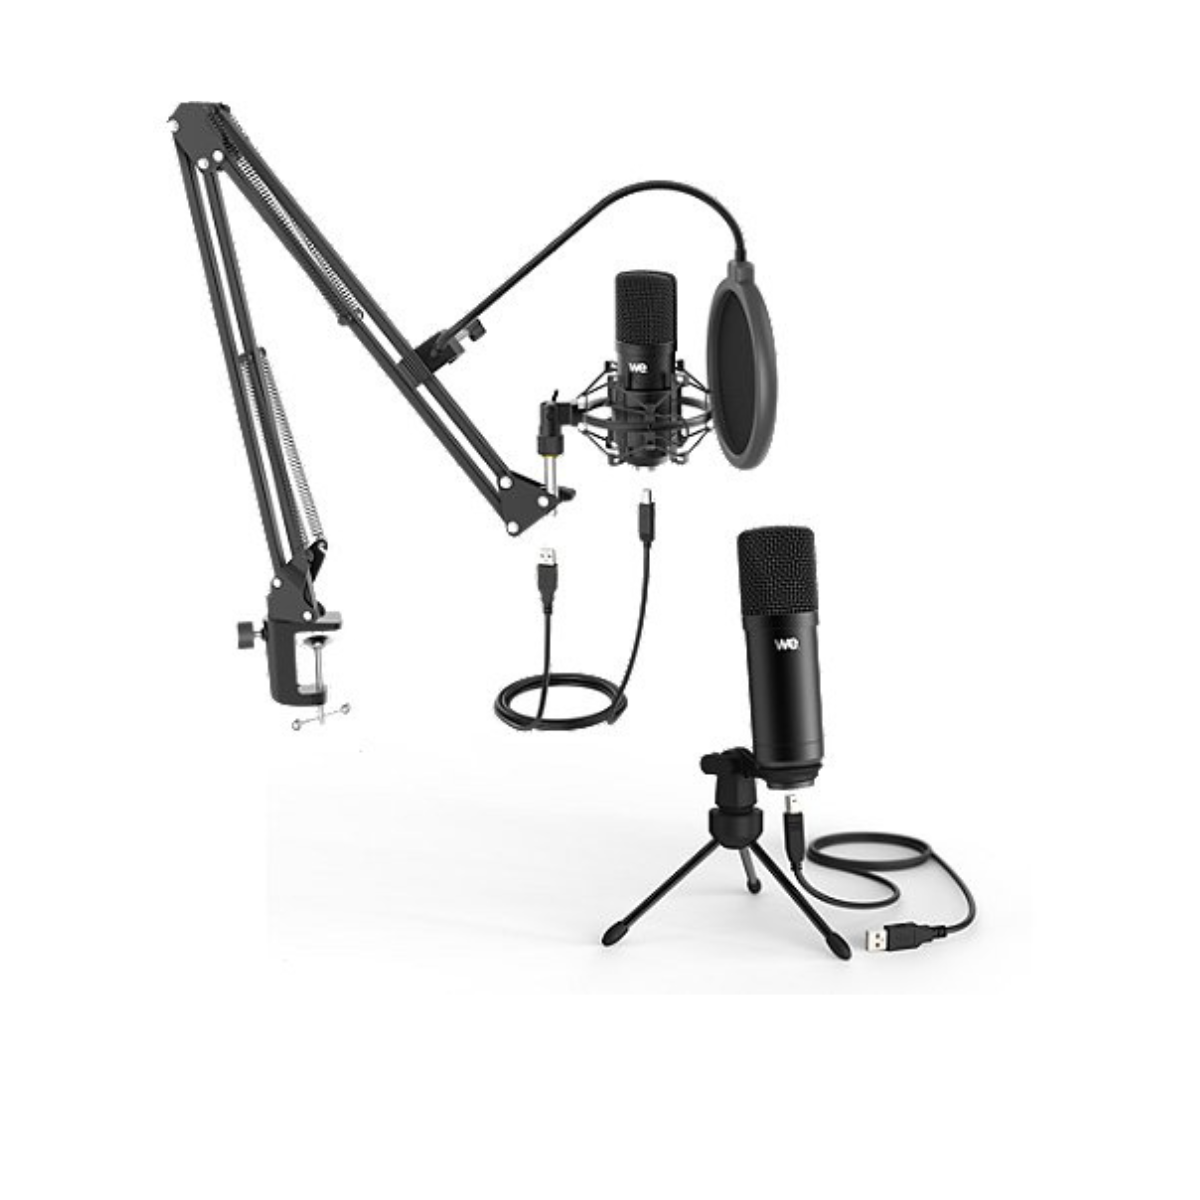 https://www.videoplusfrance.com/516241-product_full/we-pack-microphone-usb-steaming-bras-reglable-et-orientable-filtre.jpg